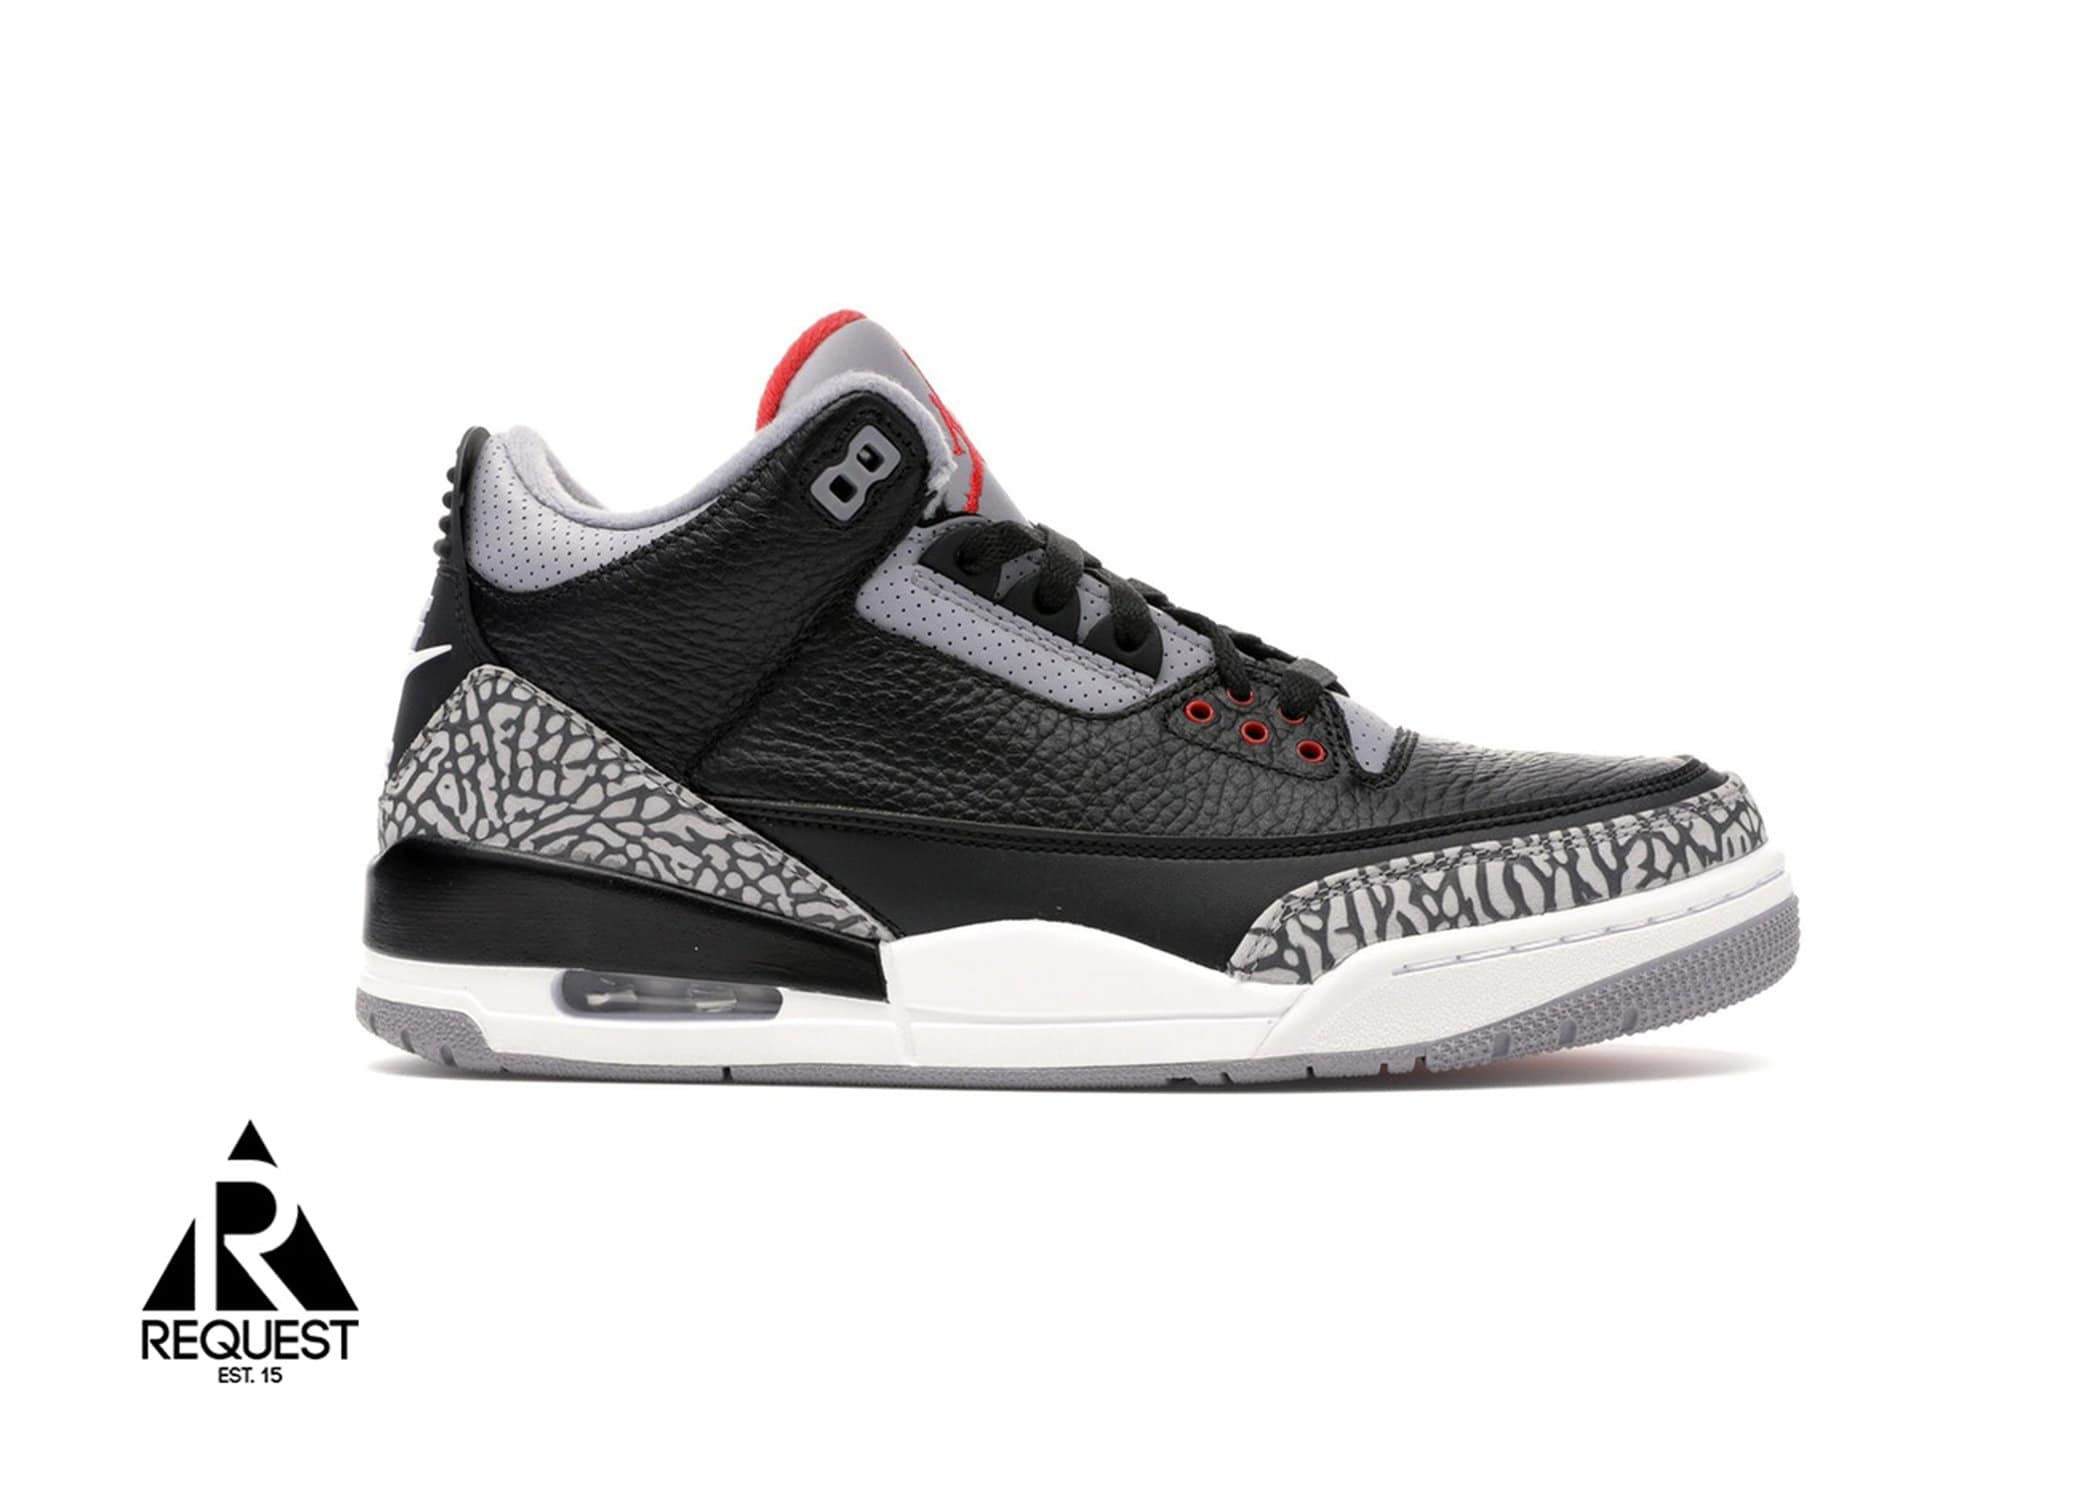 Air Jordan 3 Retro “Black Cement”